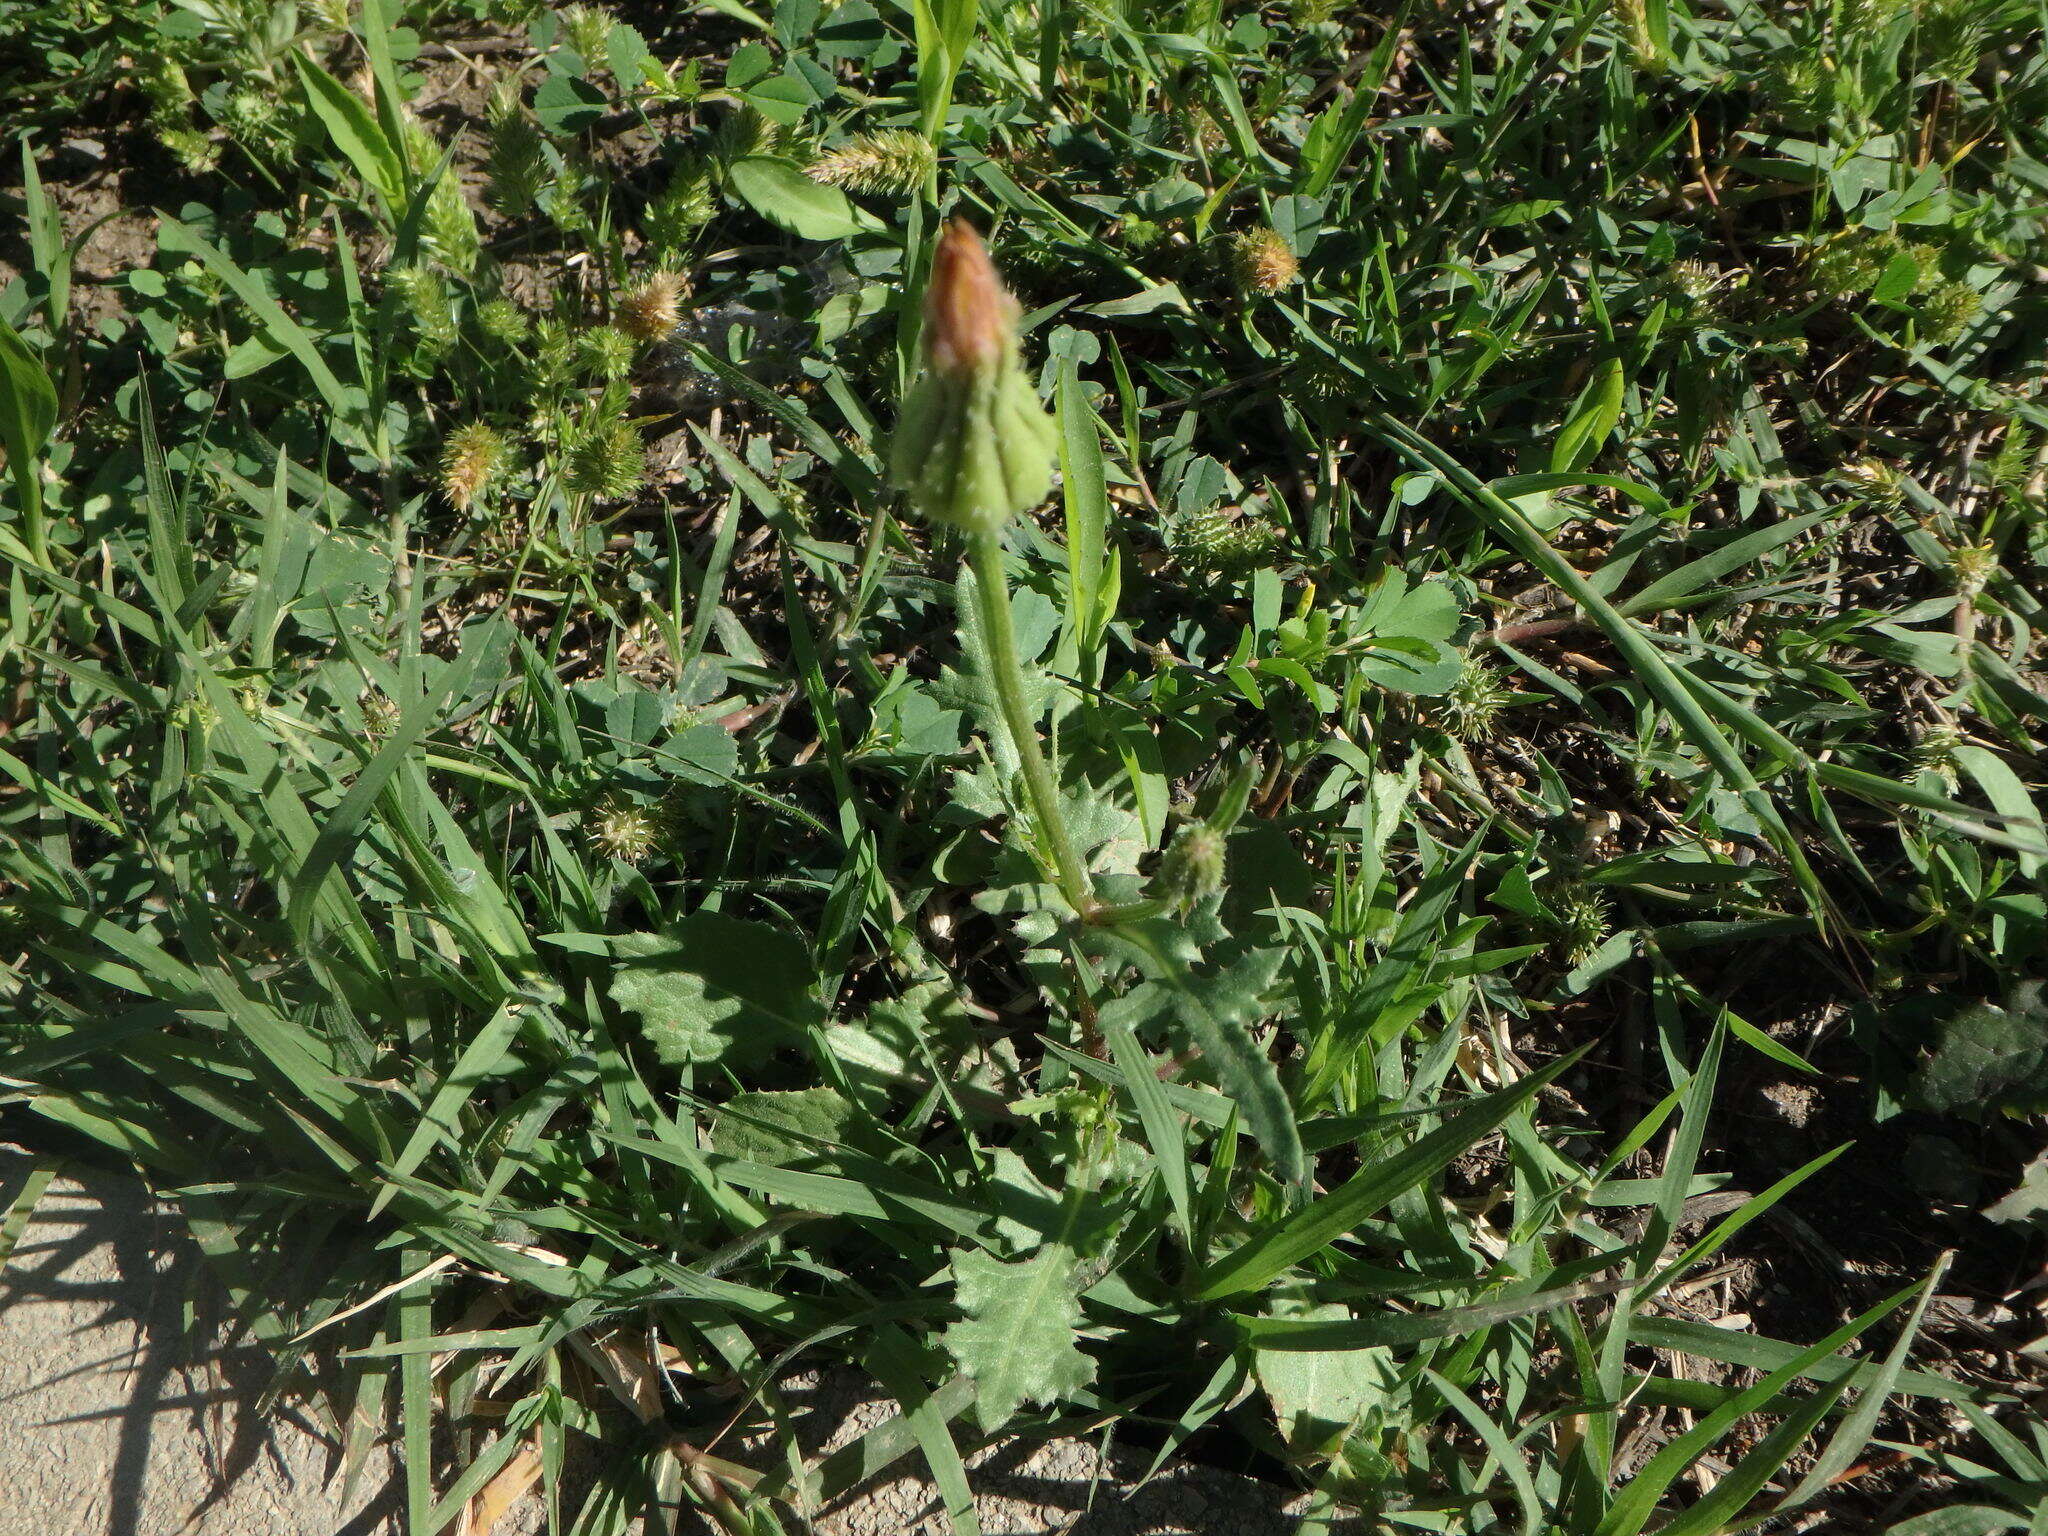 Sivun Urospermum picroides (L.) Scop. ex F. W. Schmidt kuva